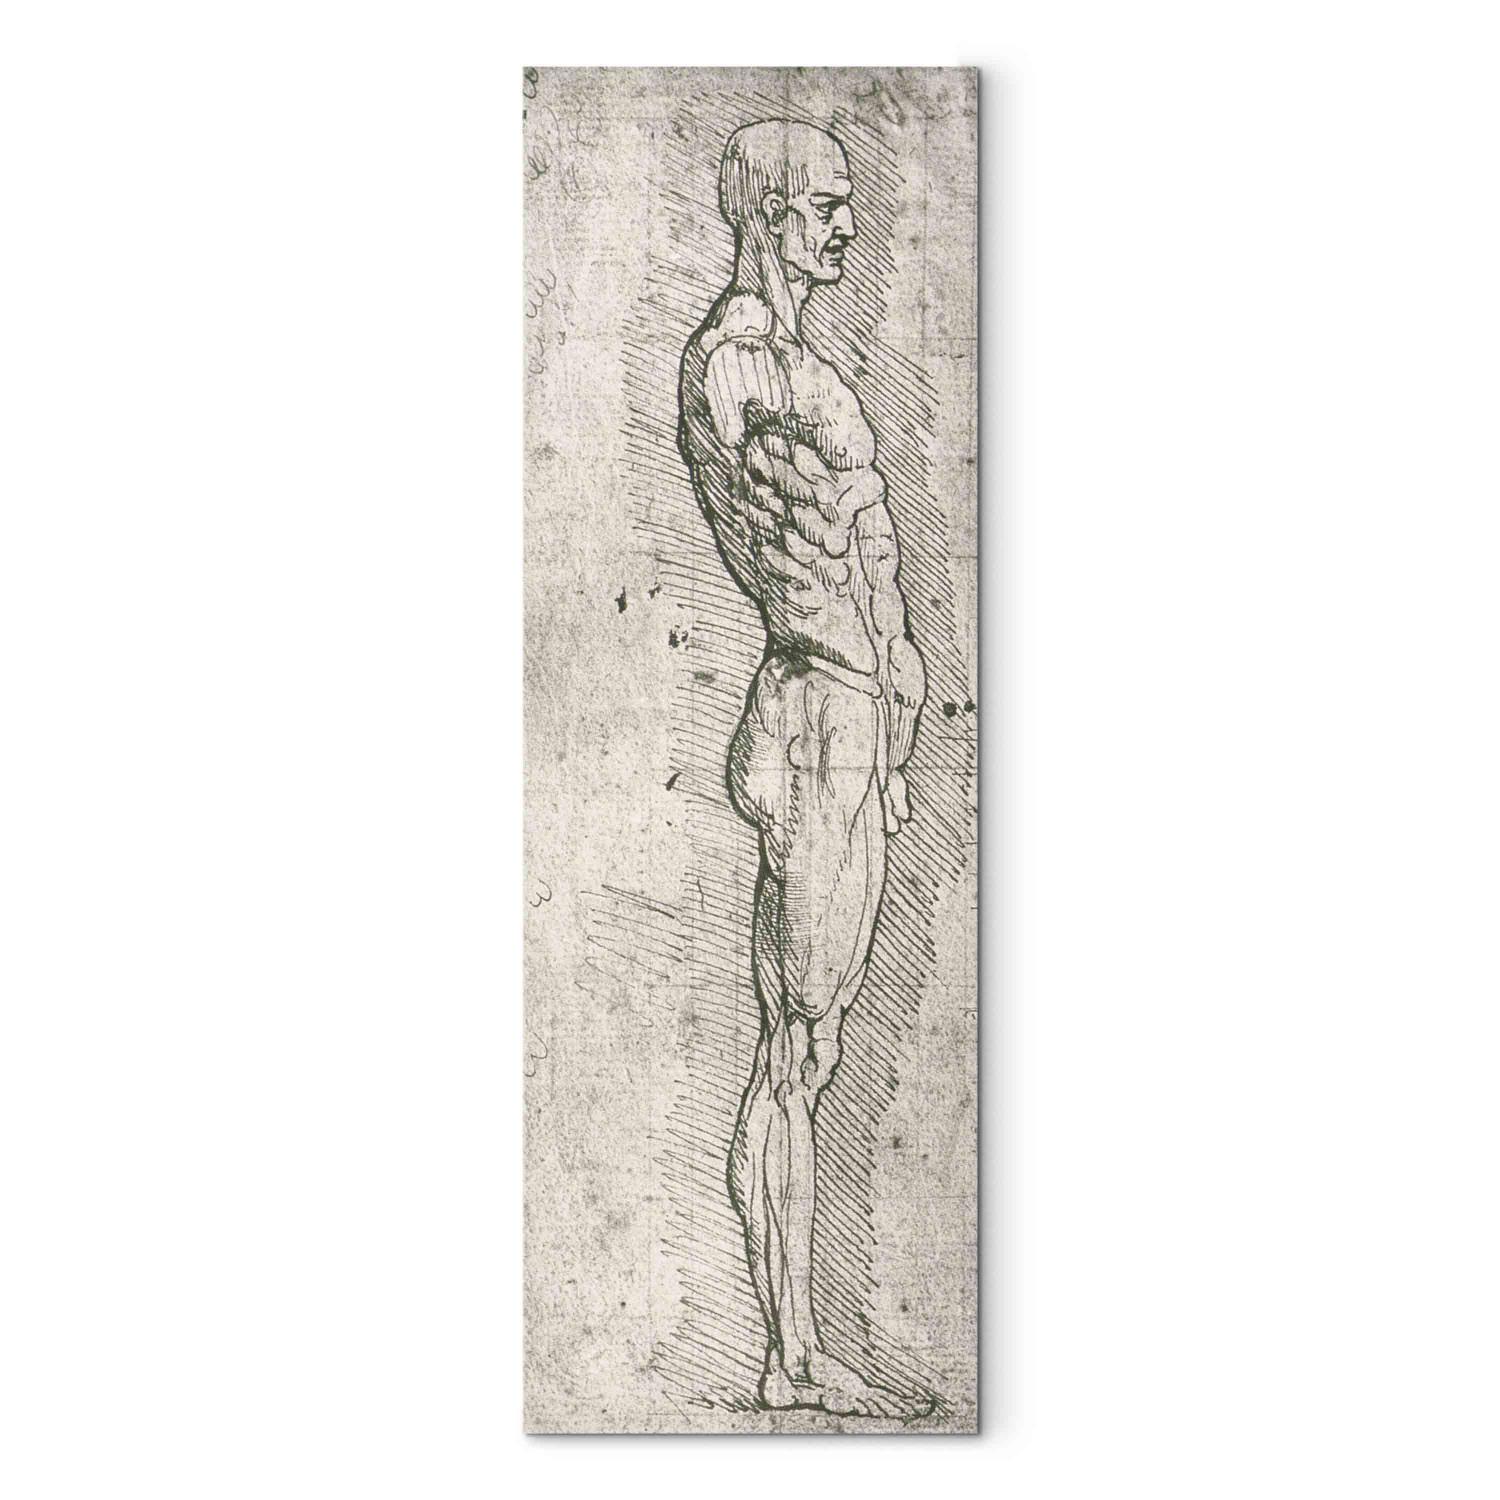 Réplica de pintura Anatomical Study (pen and ink on paper)